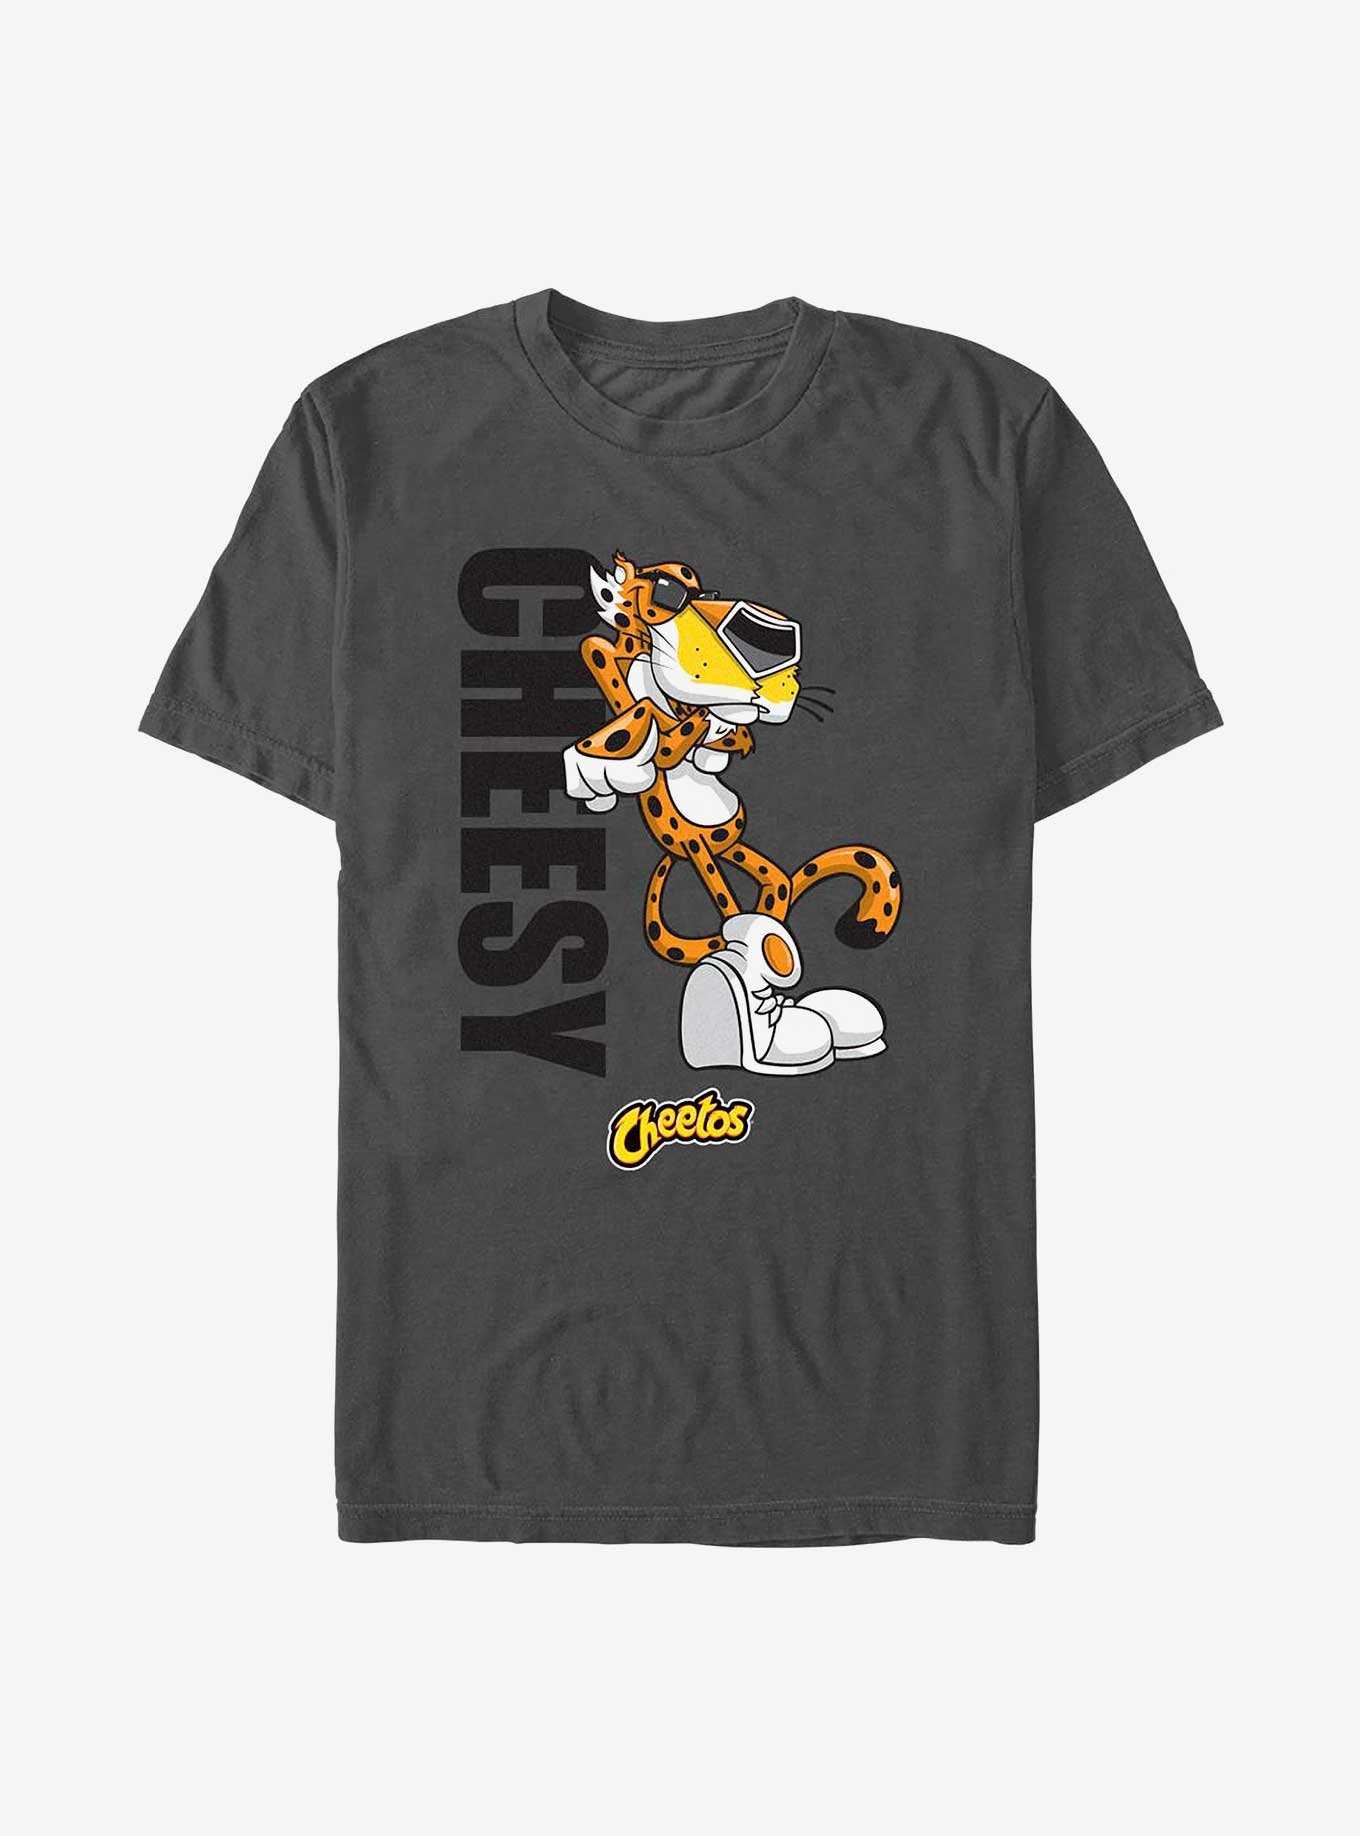 Chester Cheetah Cheetos Pajama Pants Sleep Lounge Size XXL New